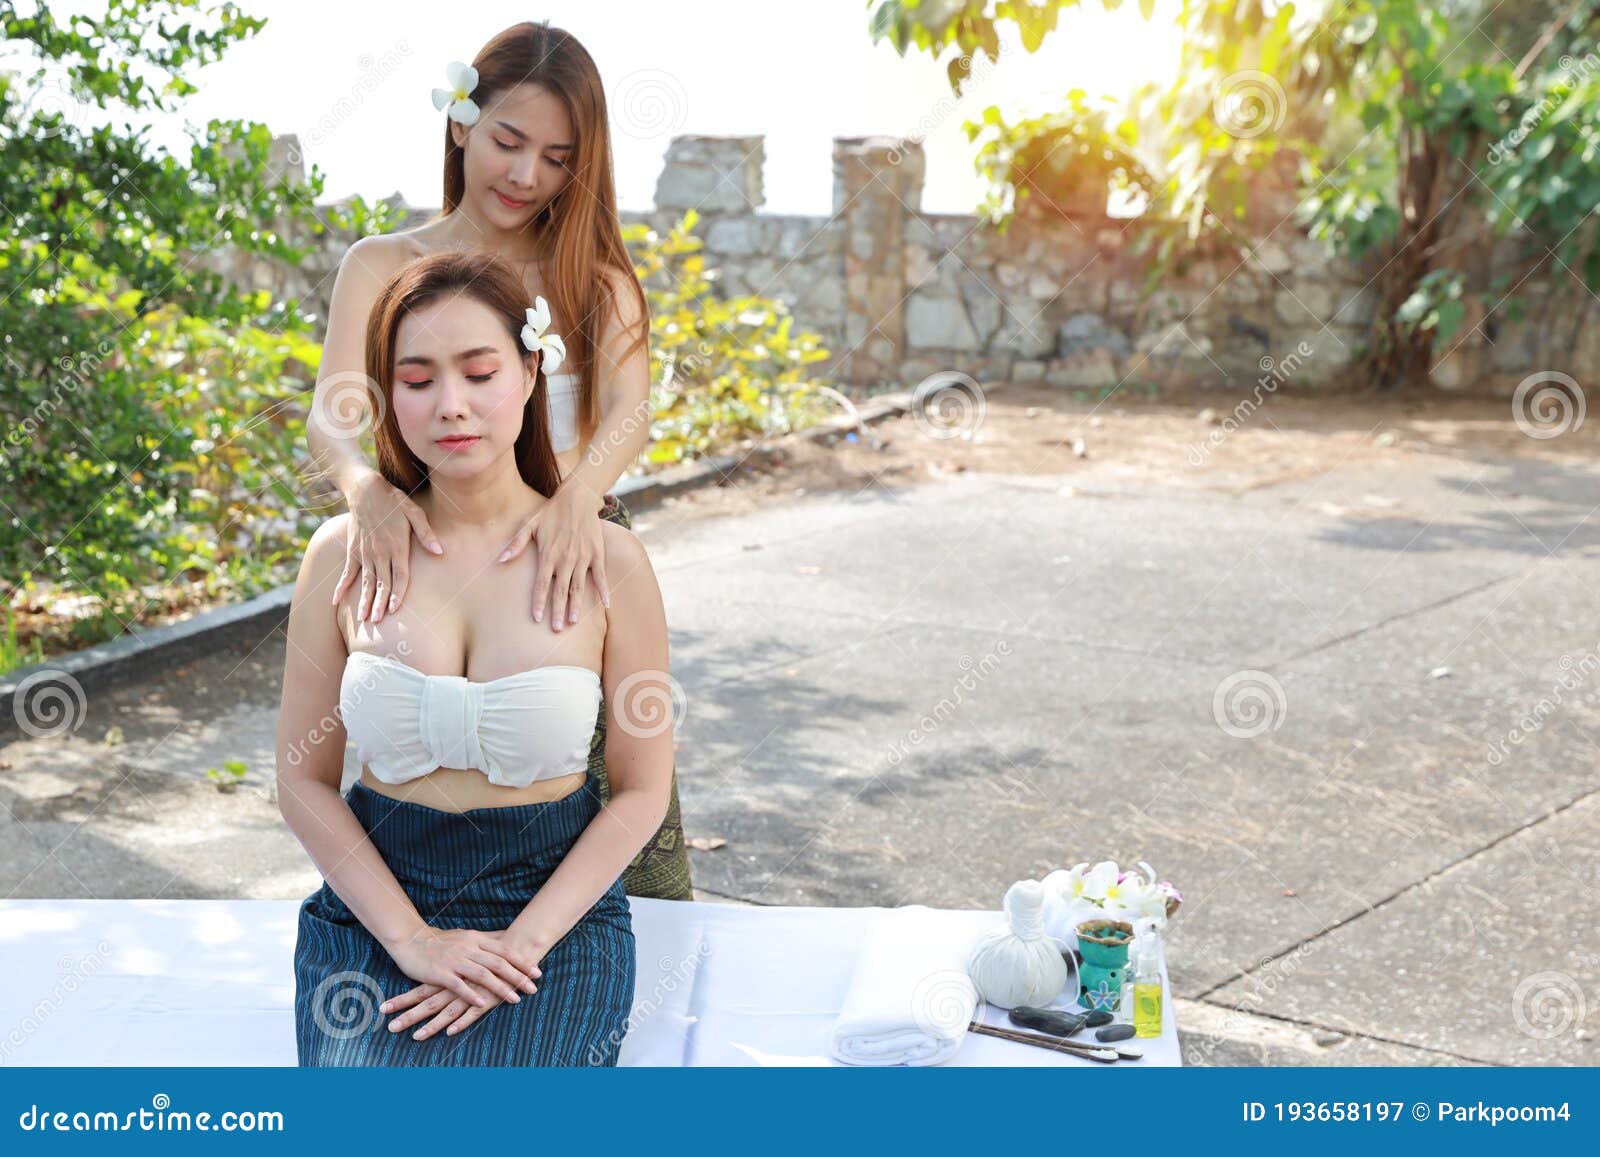 sexy breast massage